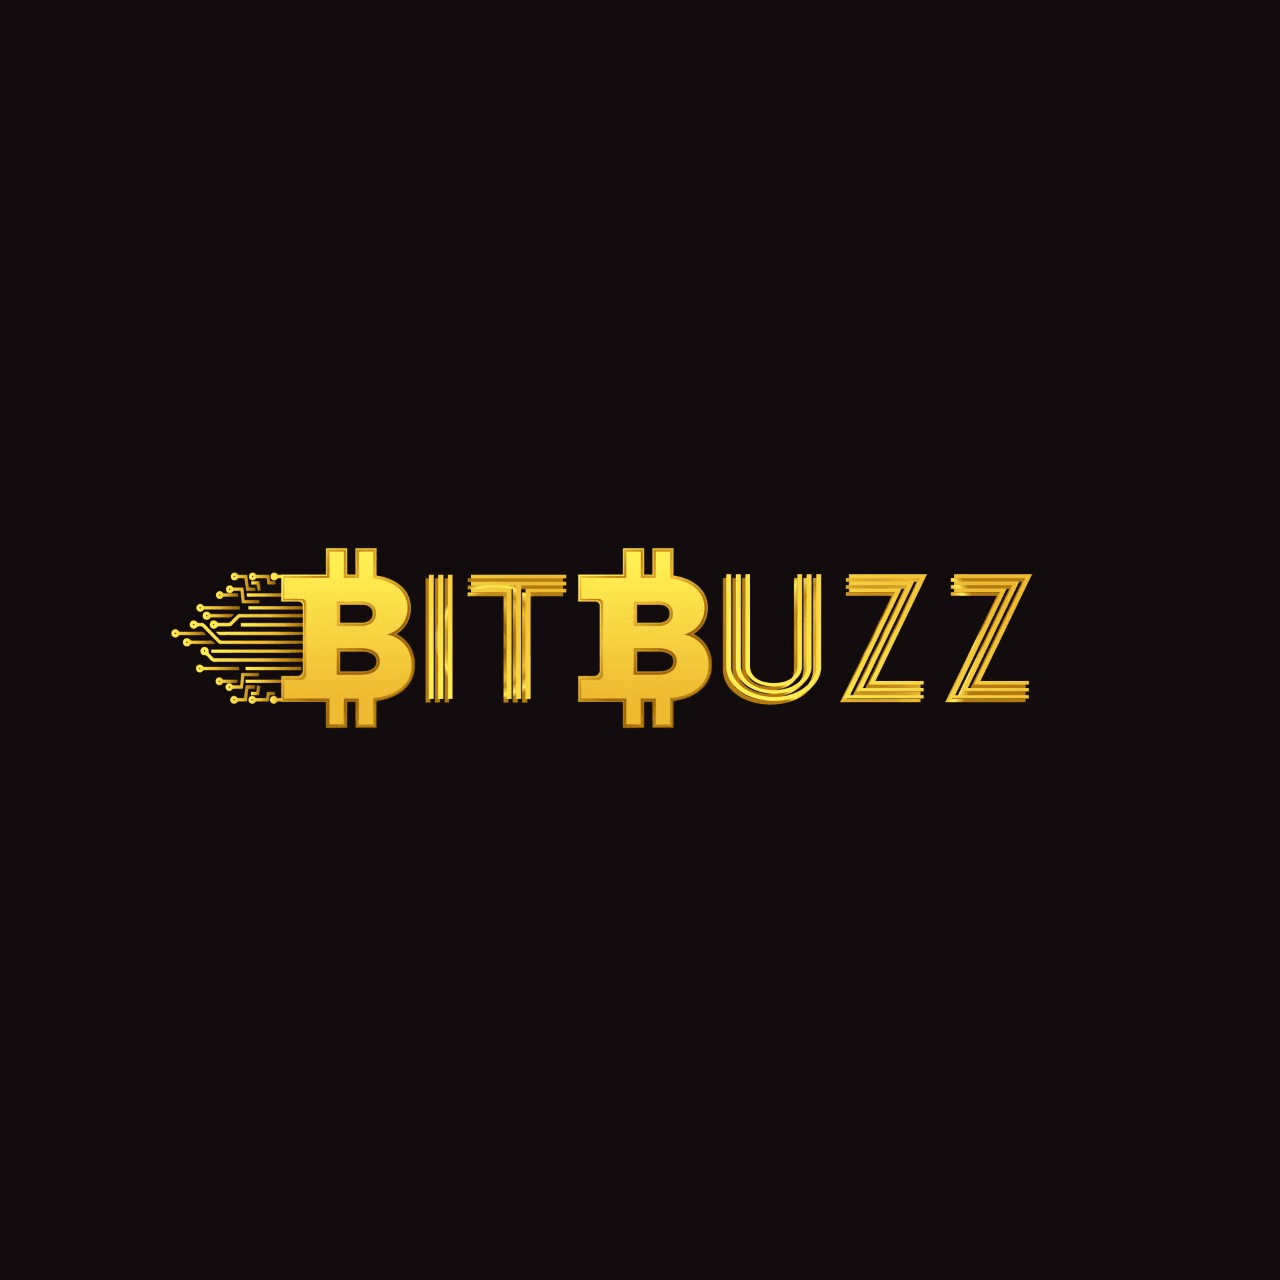 BitBuzz